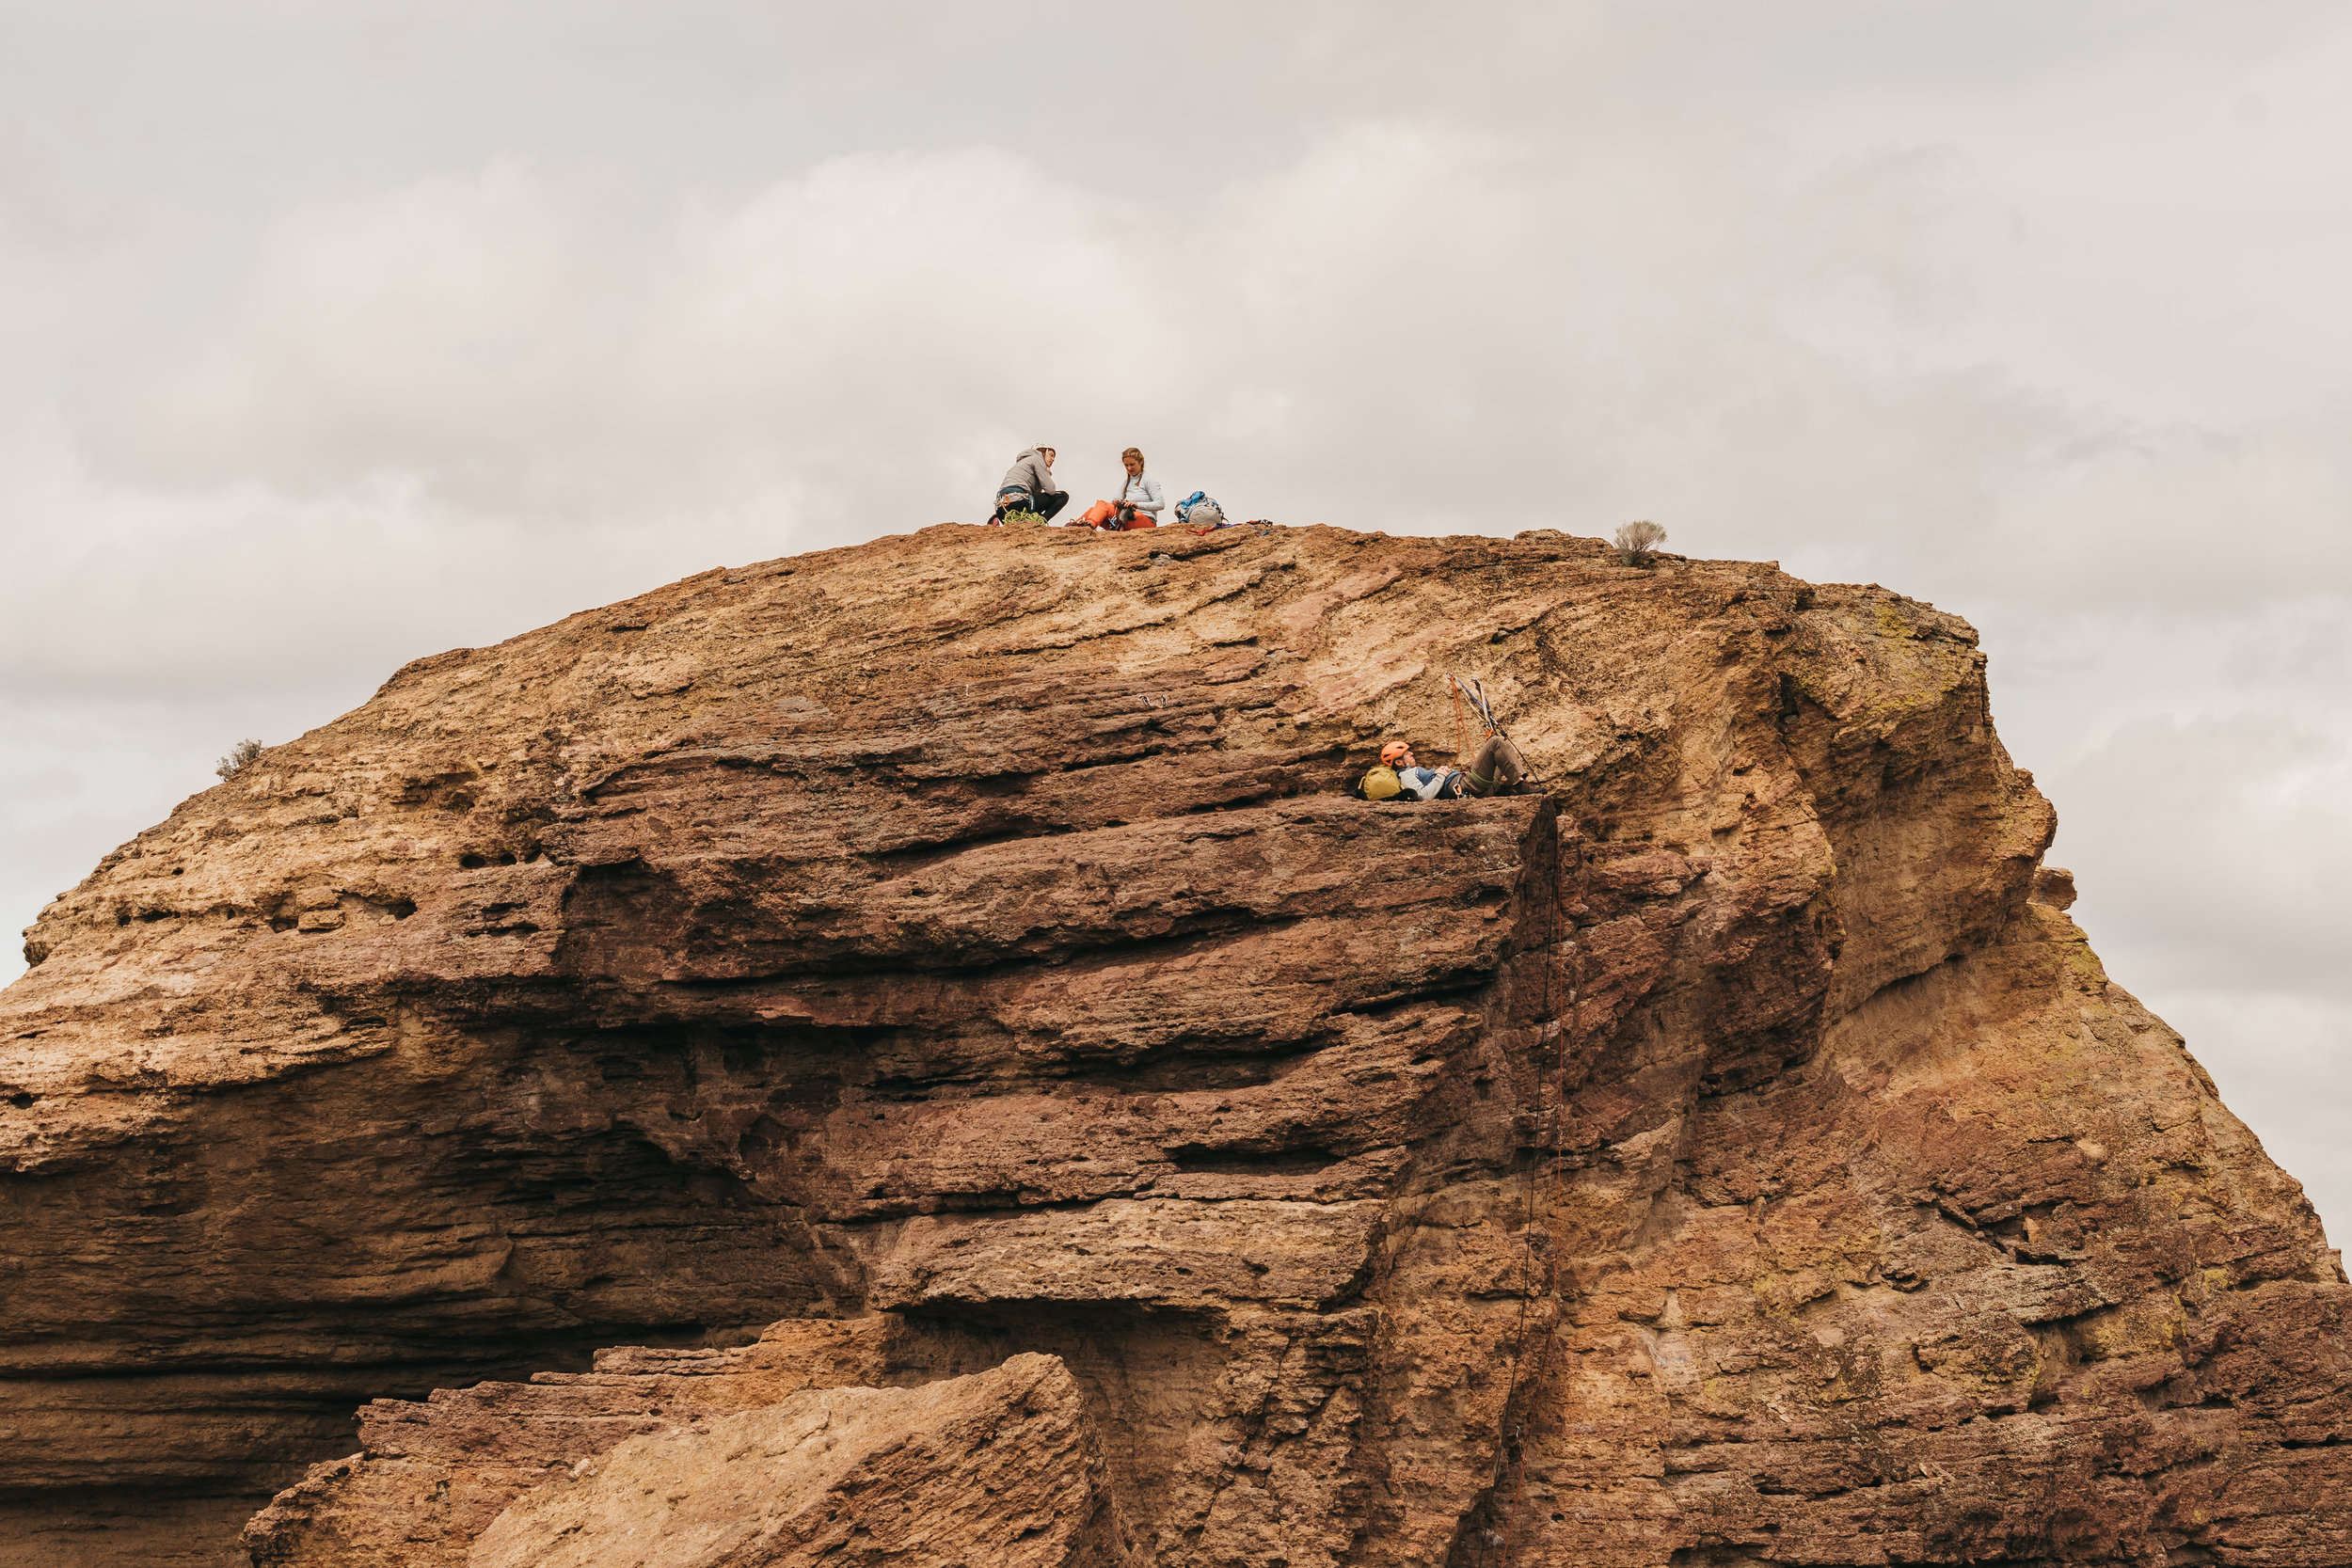 Smith Rock Rock Climbing Elopement | Between the Pine Adventure Elopement Photography